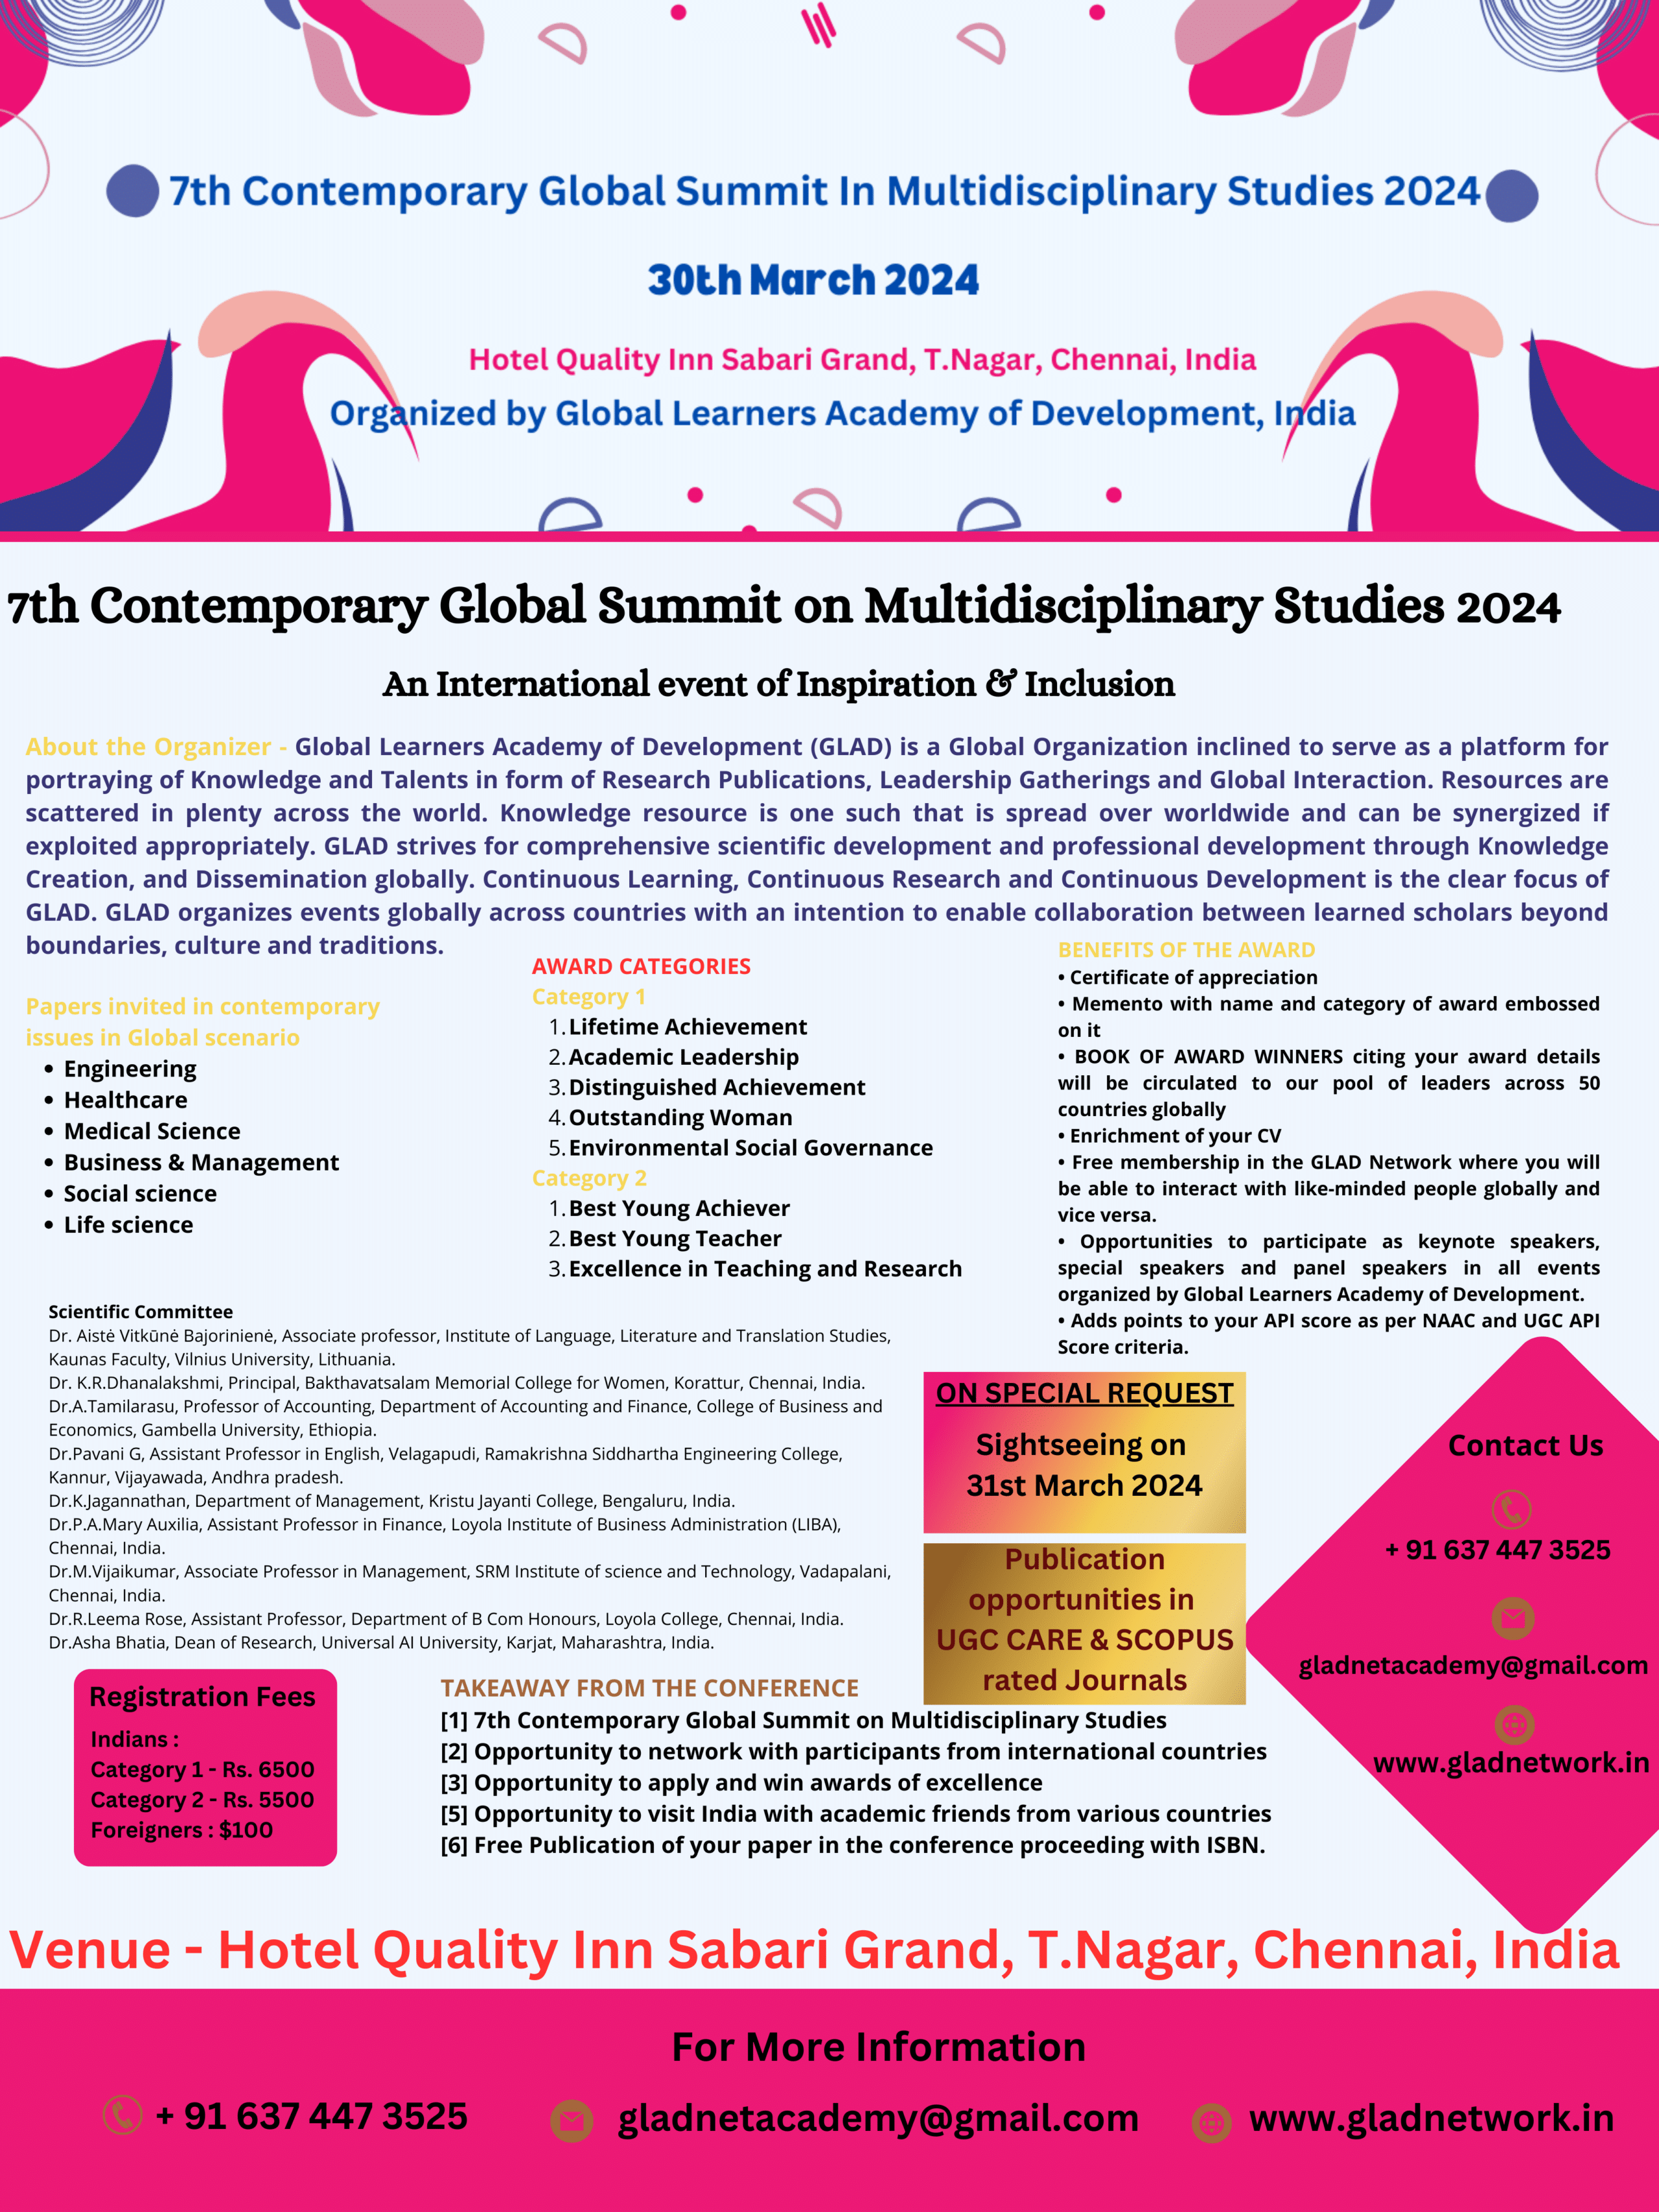 7th Contemporary Global Summit on Multidisciplinary Studies 2024